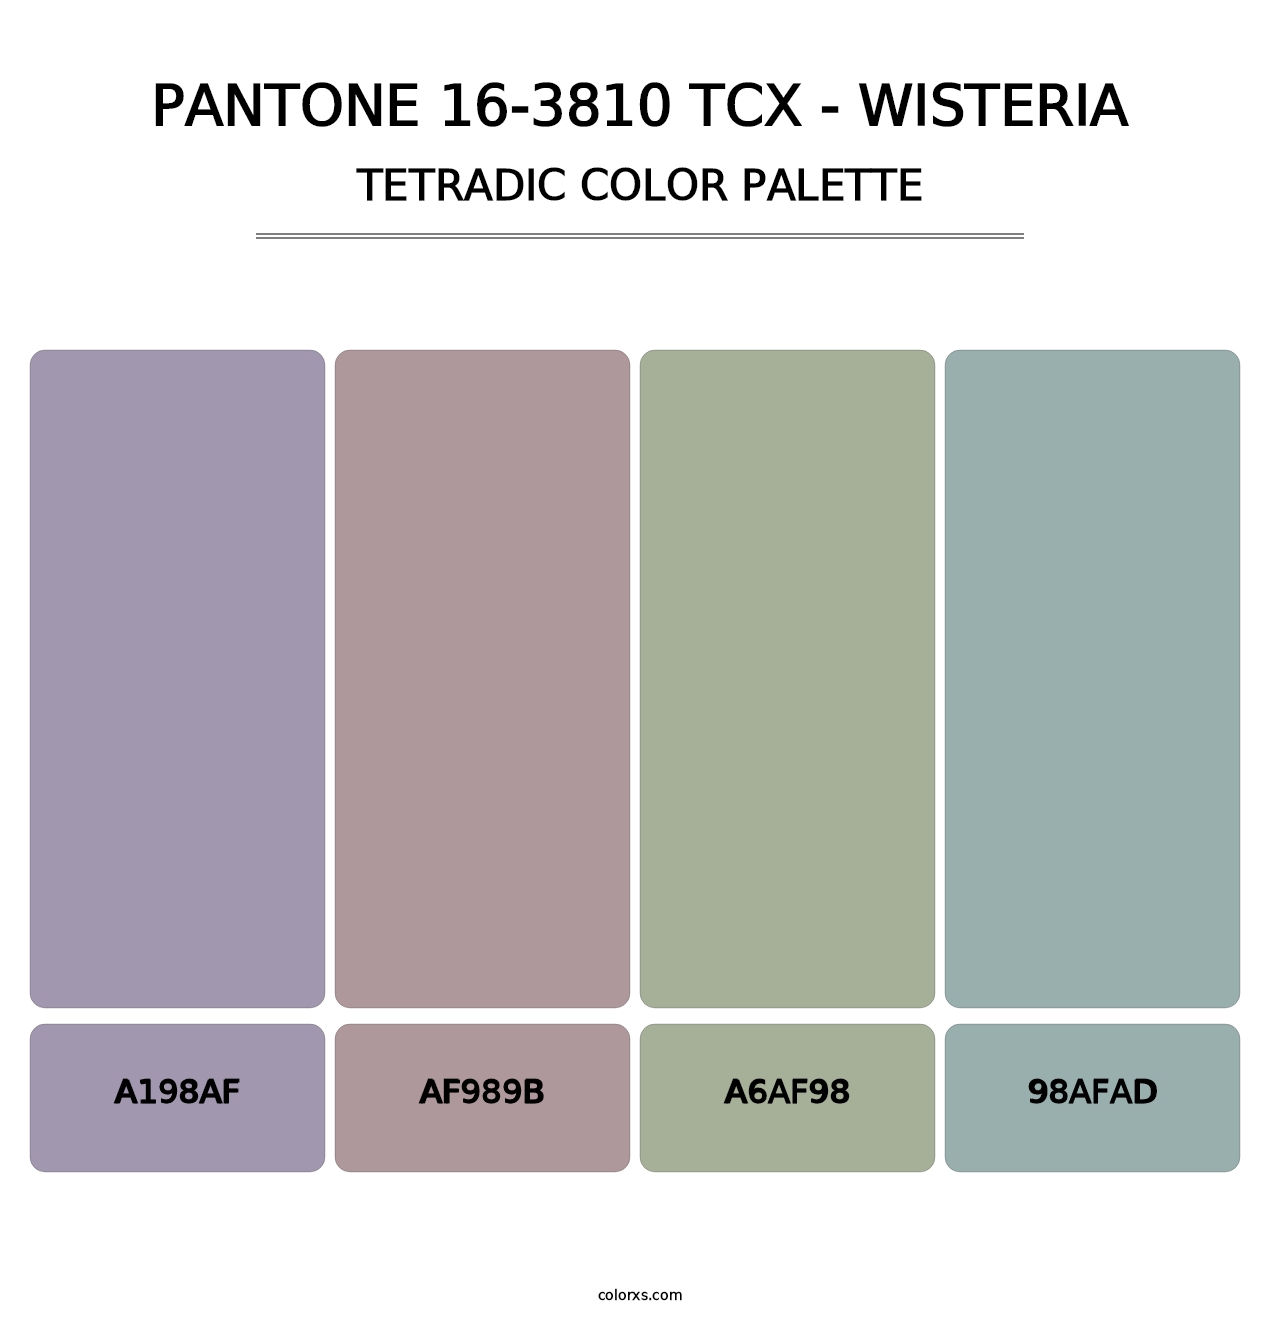 PANTONE 16-3810 TCX - Wisteria - Tetradic Color Palette